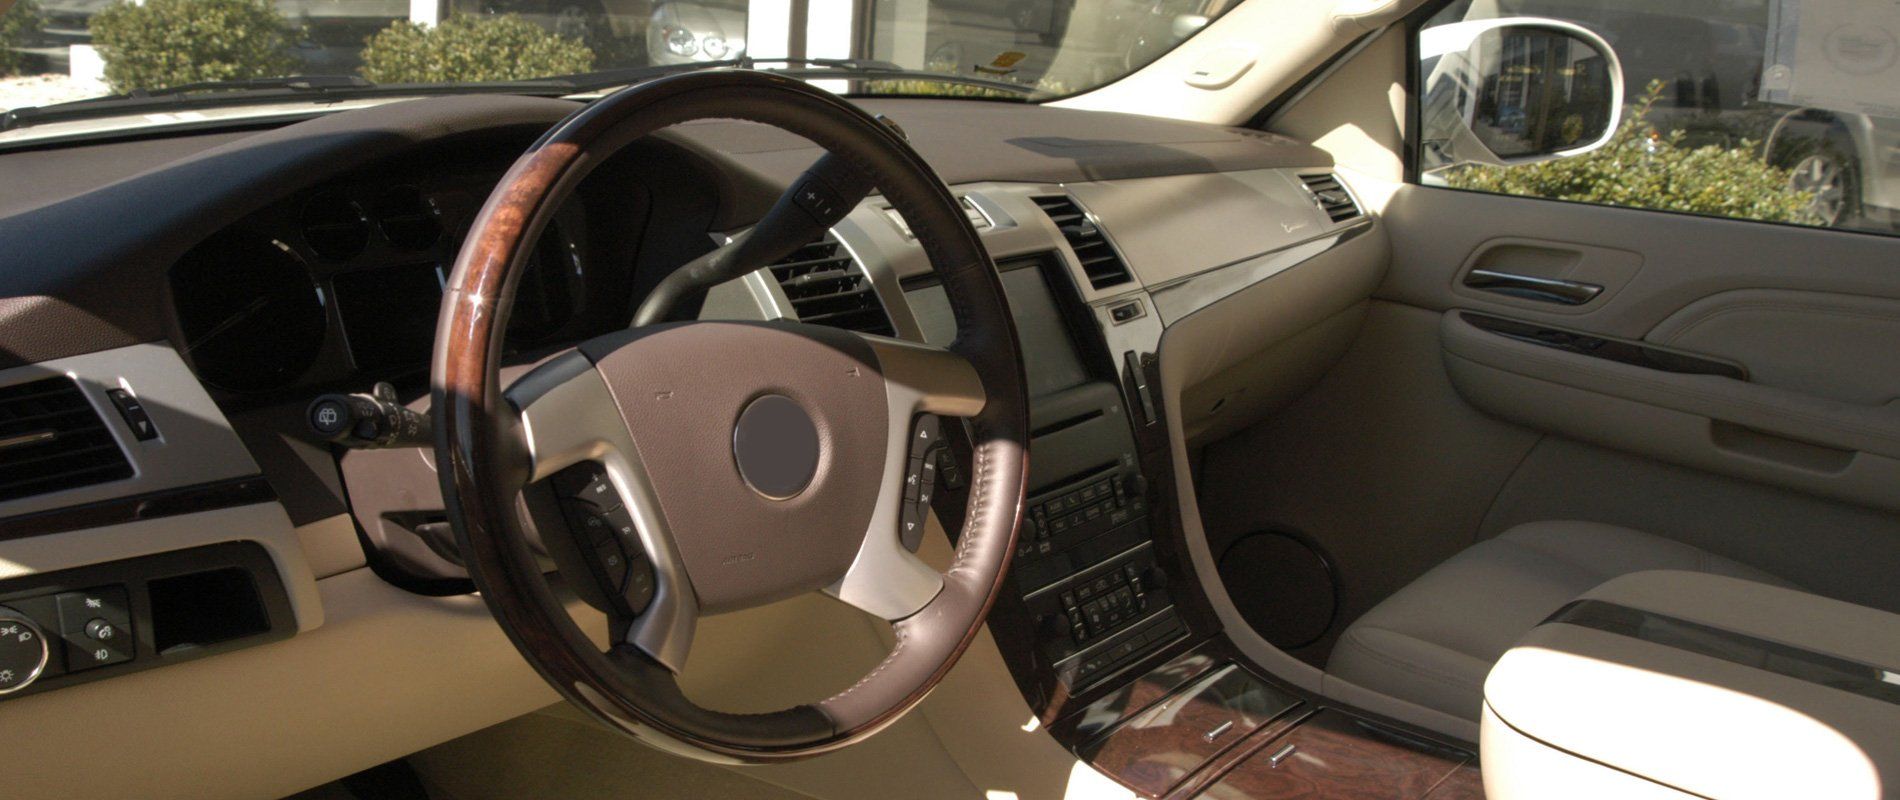 Auto interiors